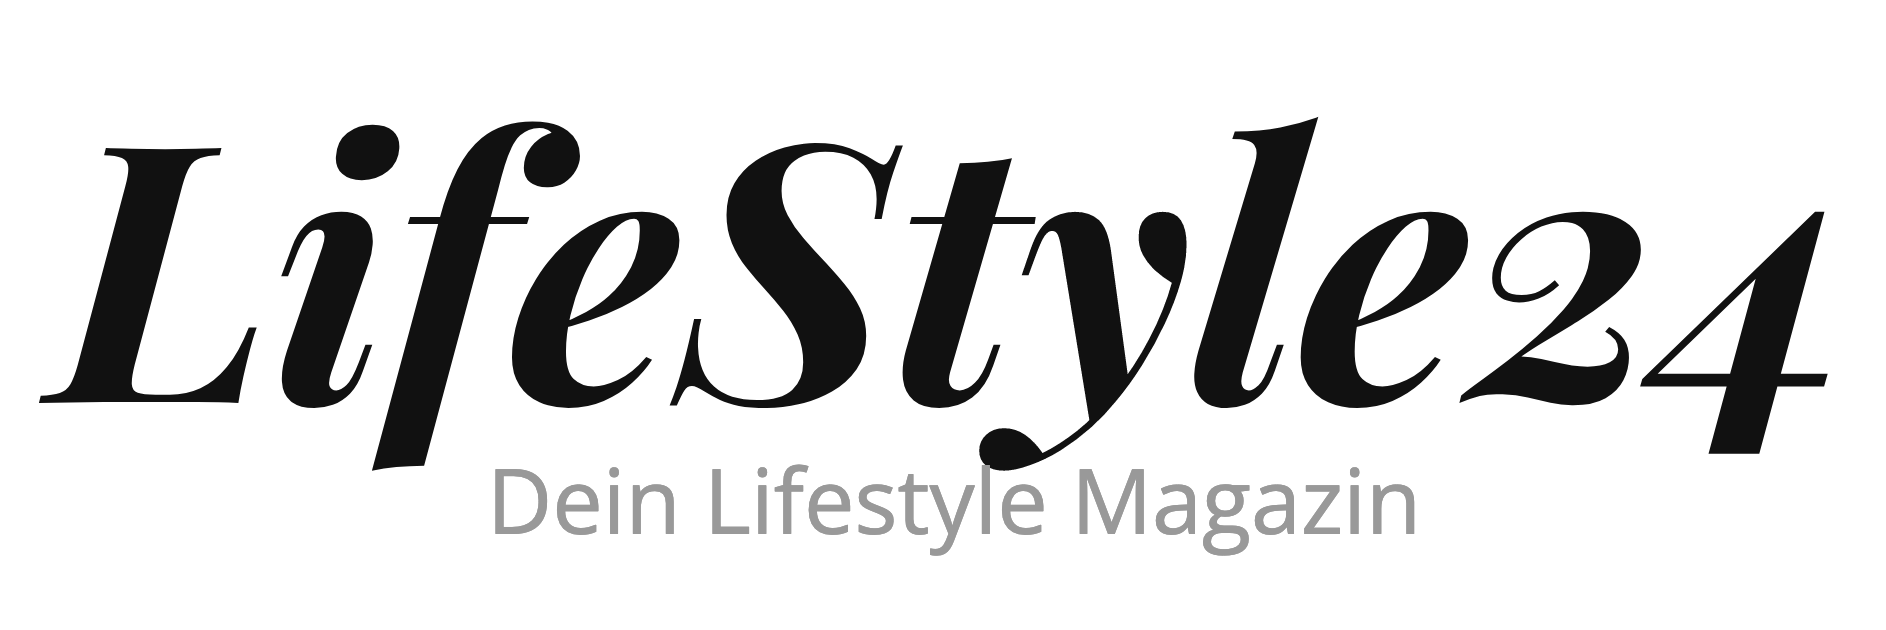 lifestyle24 dein lifestyule magazin logo